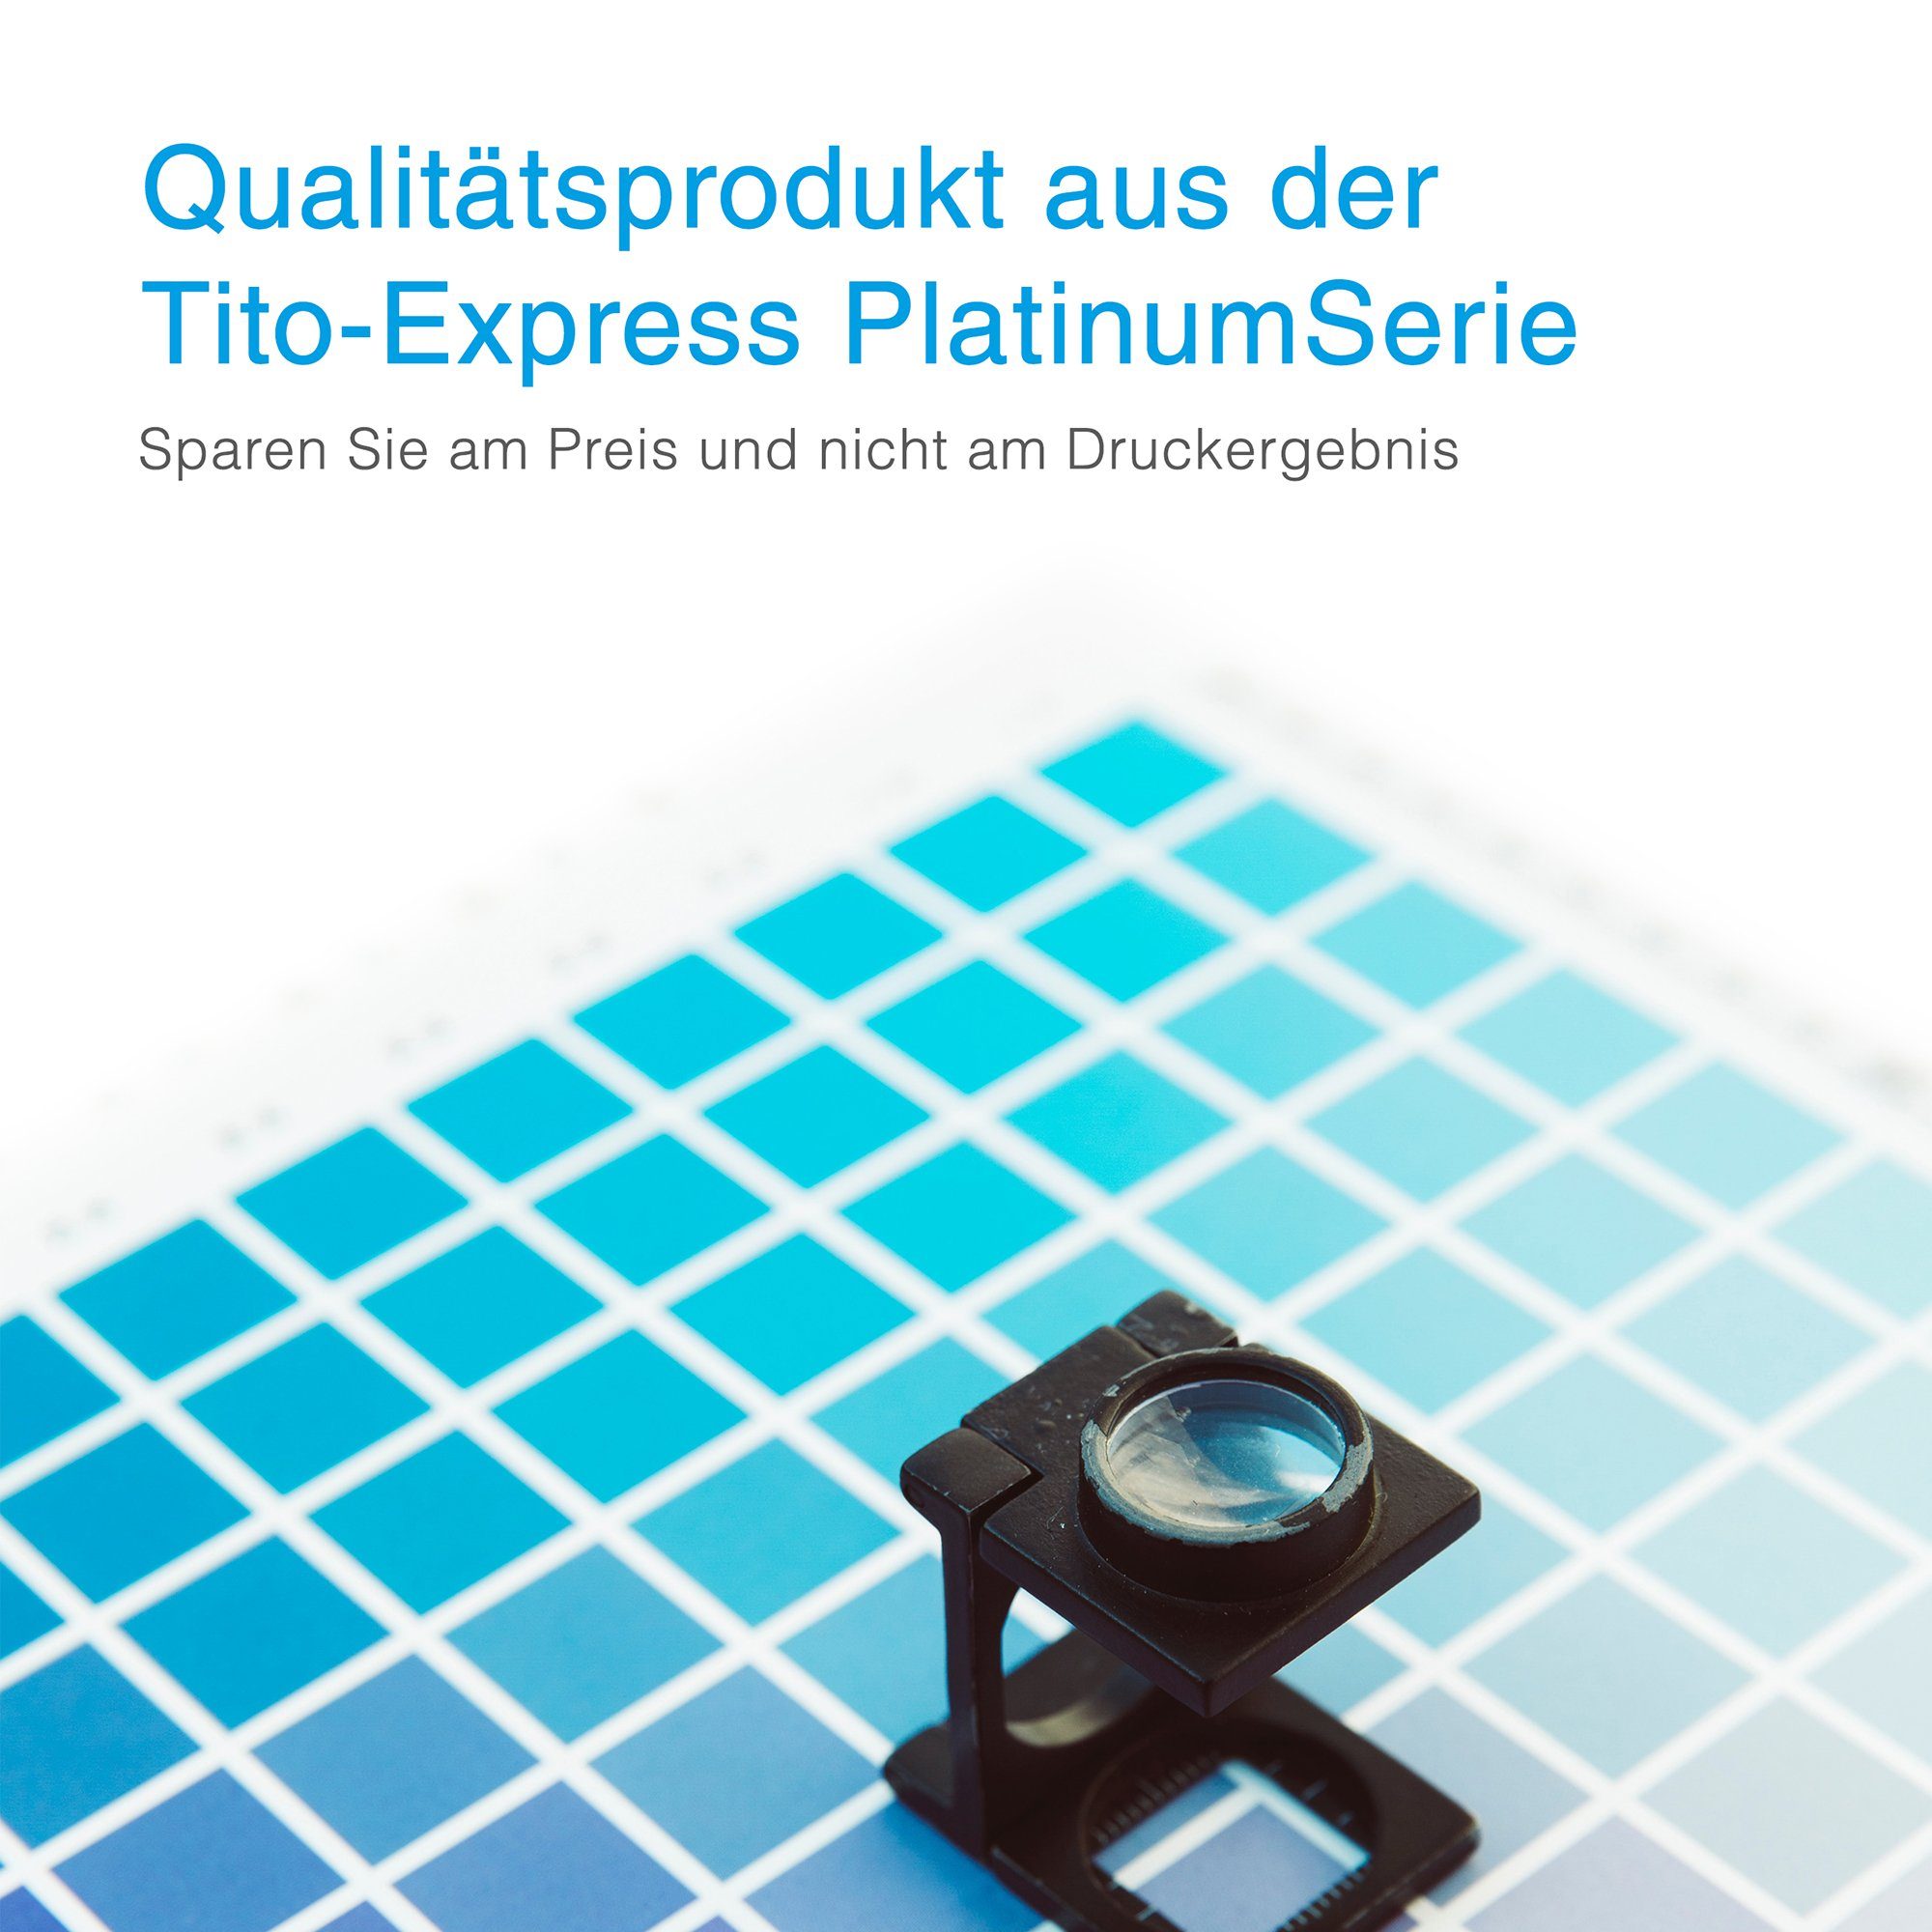 Tito-Express 3er Set ersetzt XL iP2500 iP1200 & Tintenpatrone MP140 MP450 Canon iP2600 Inkjet MX300) Pixma CL-41 iP2200 XL PG-40 (für